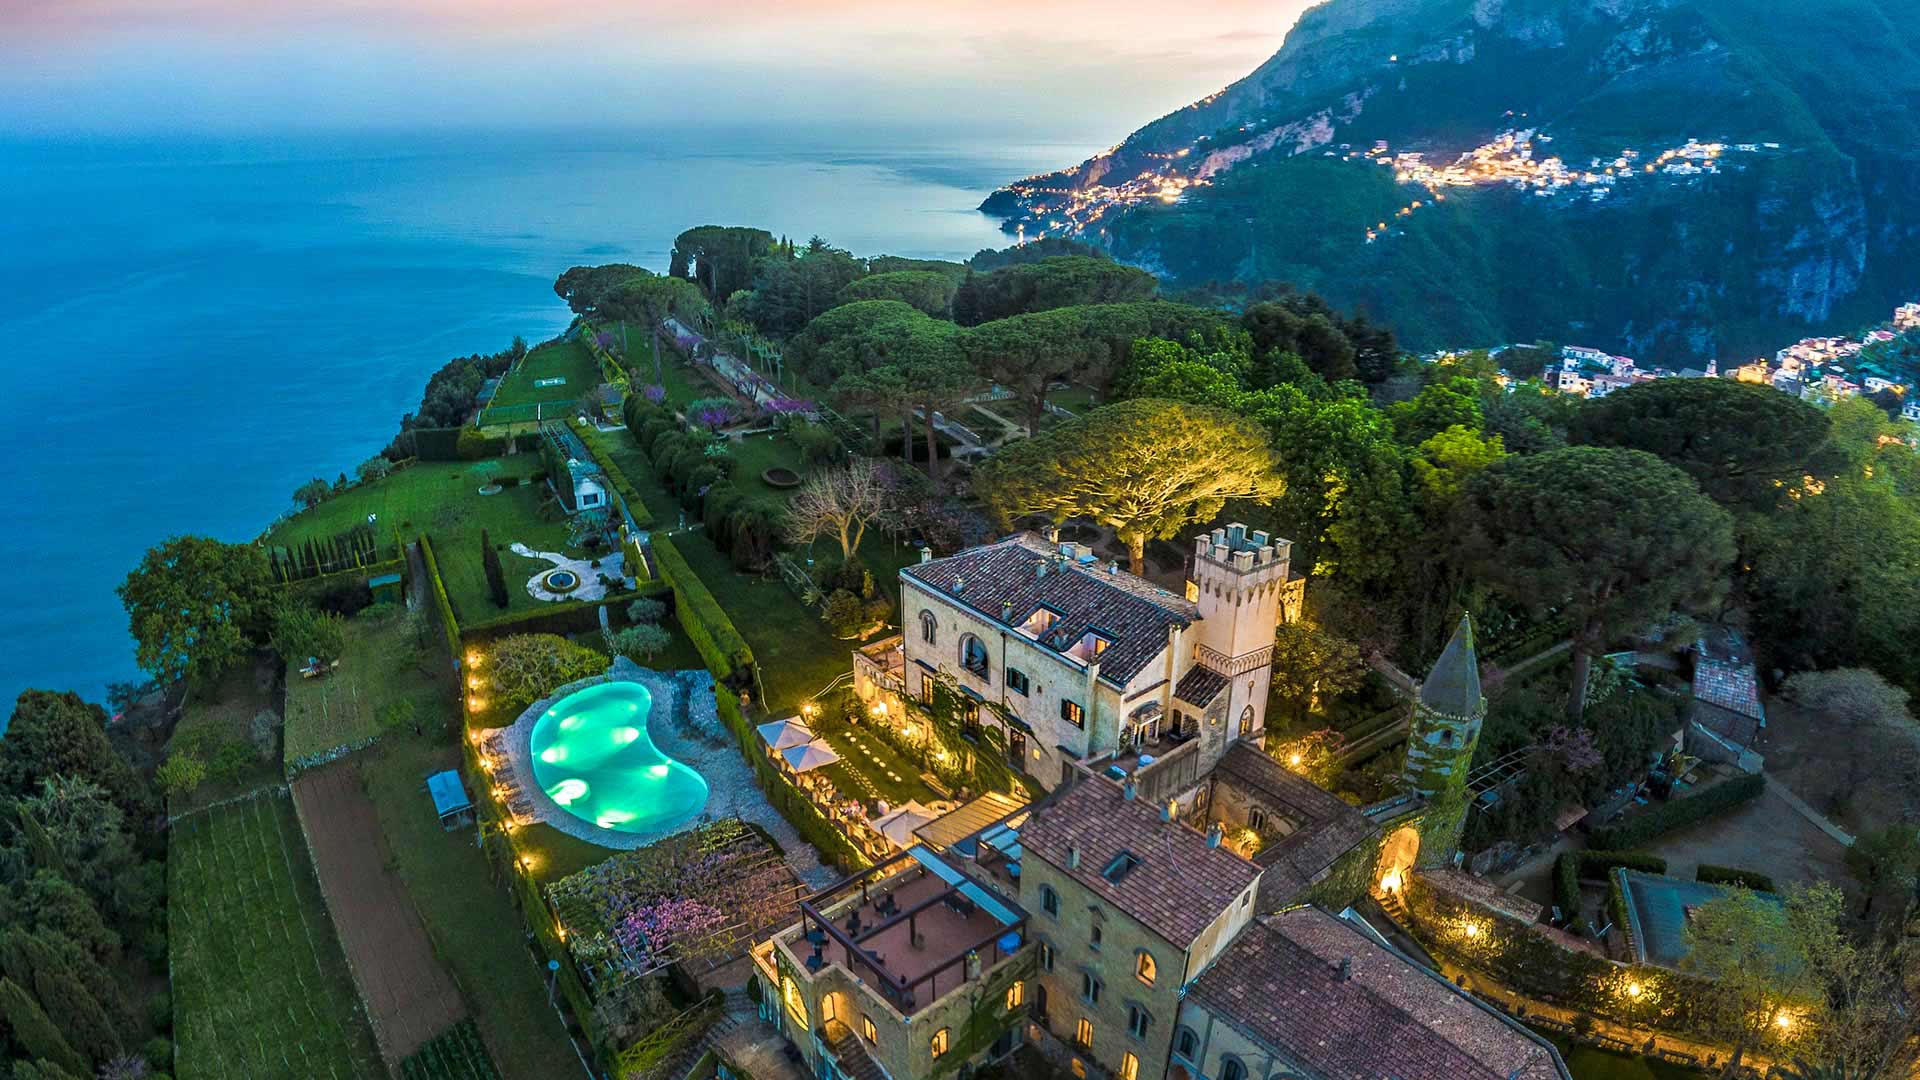 Best Hotels in Amalfi Coast Villa Cimbrone